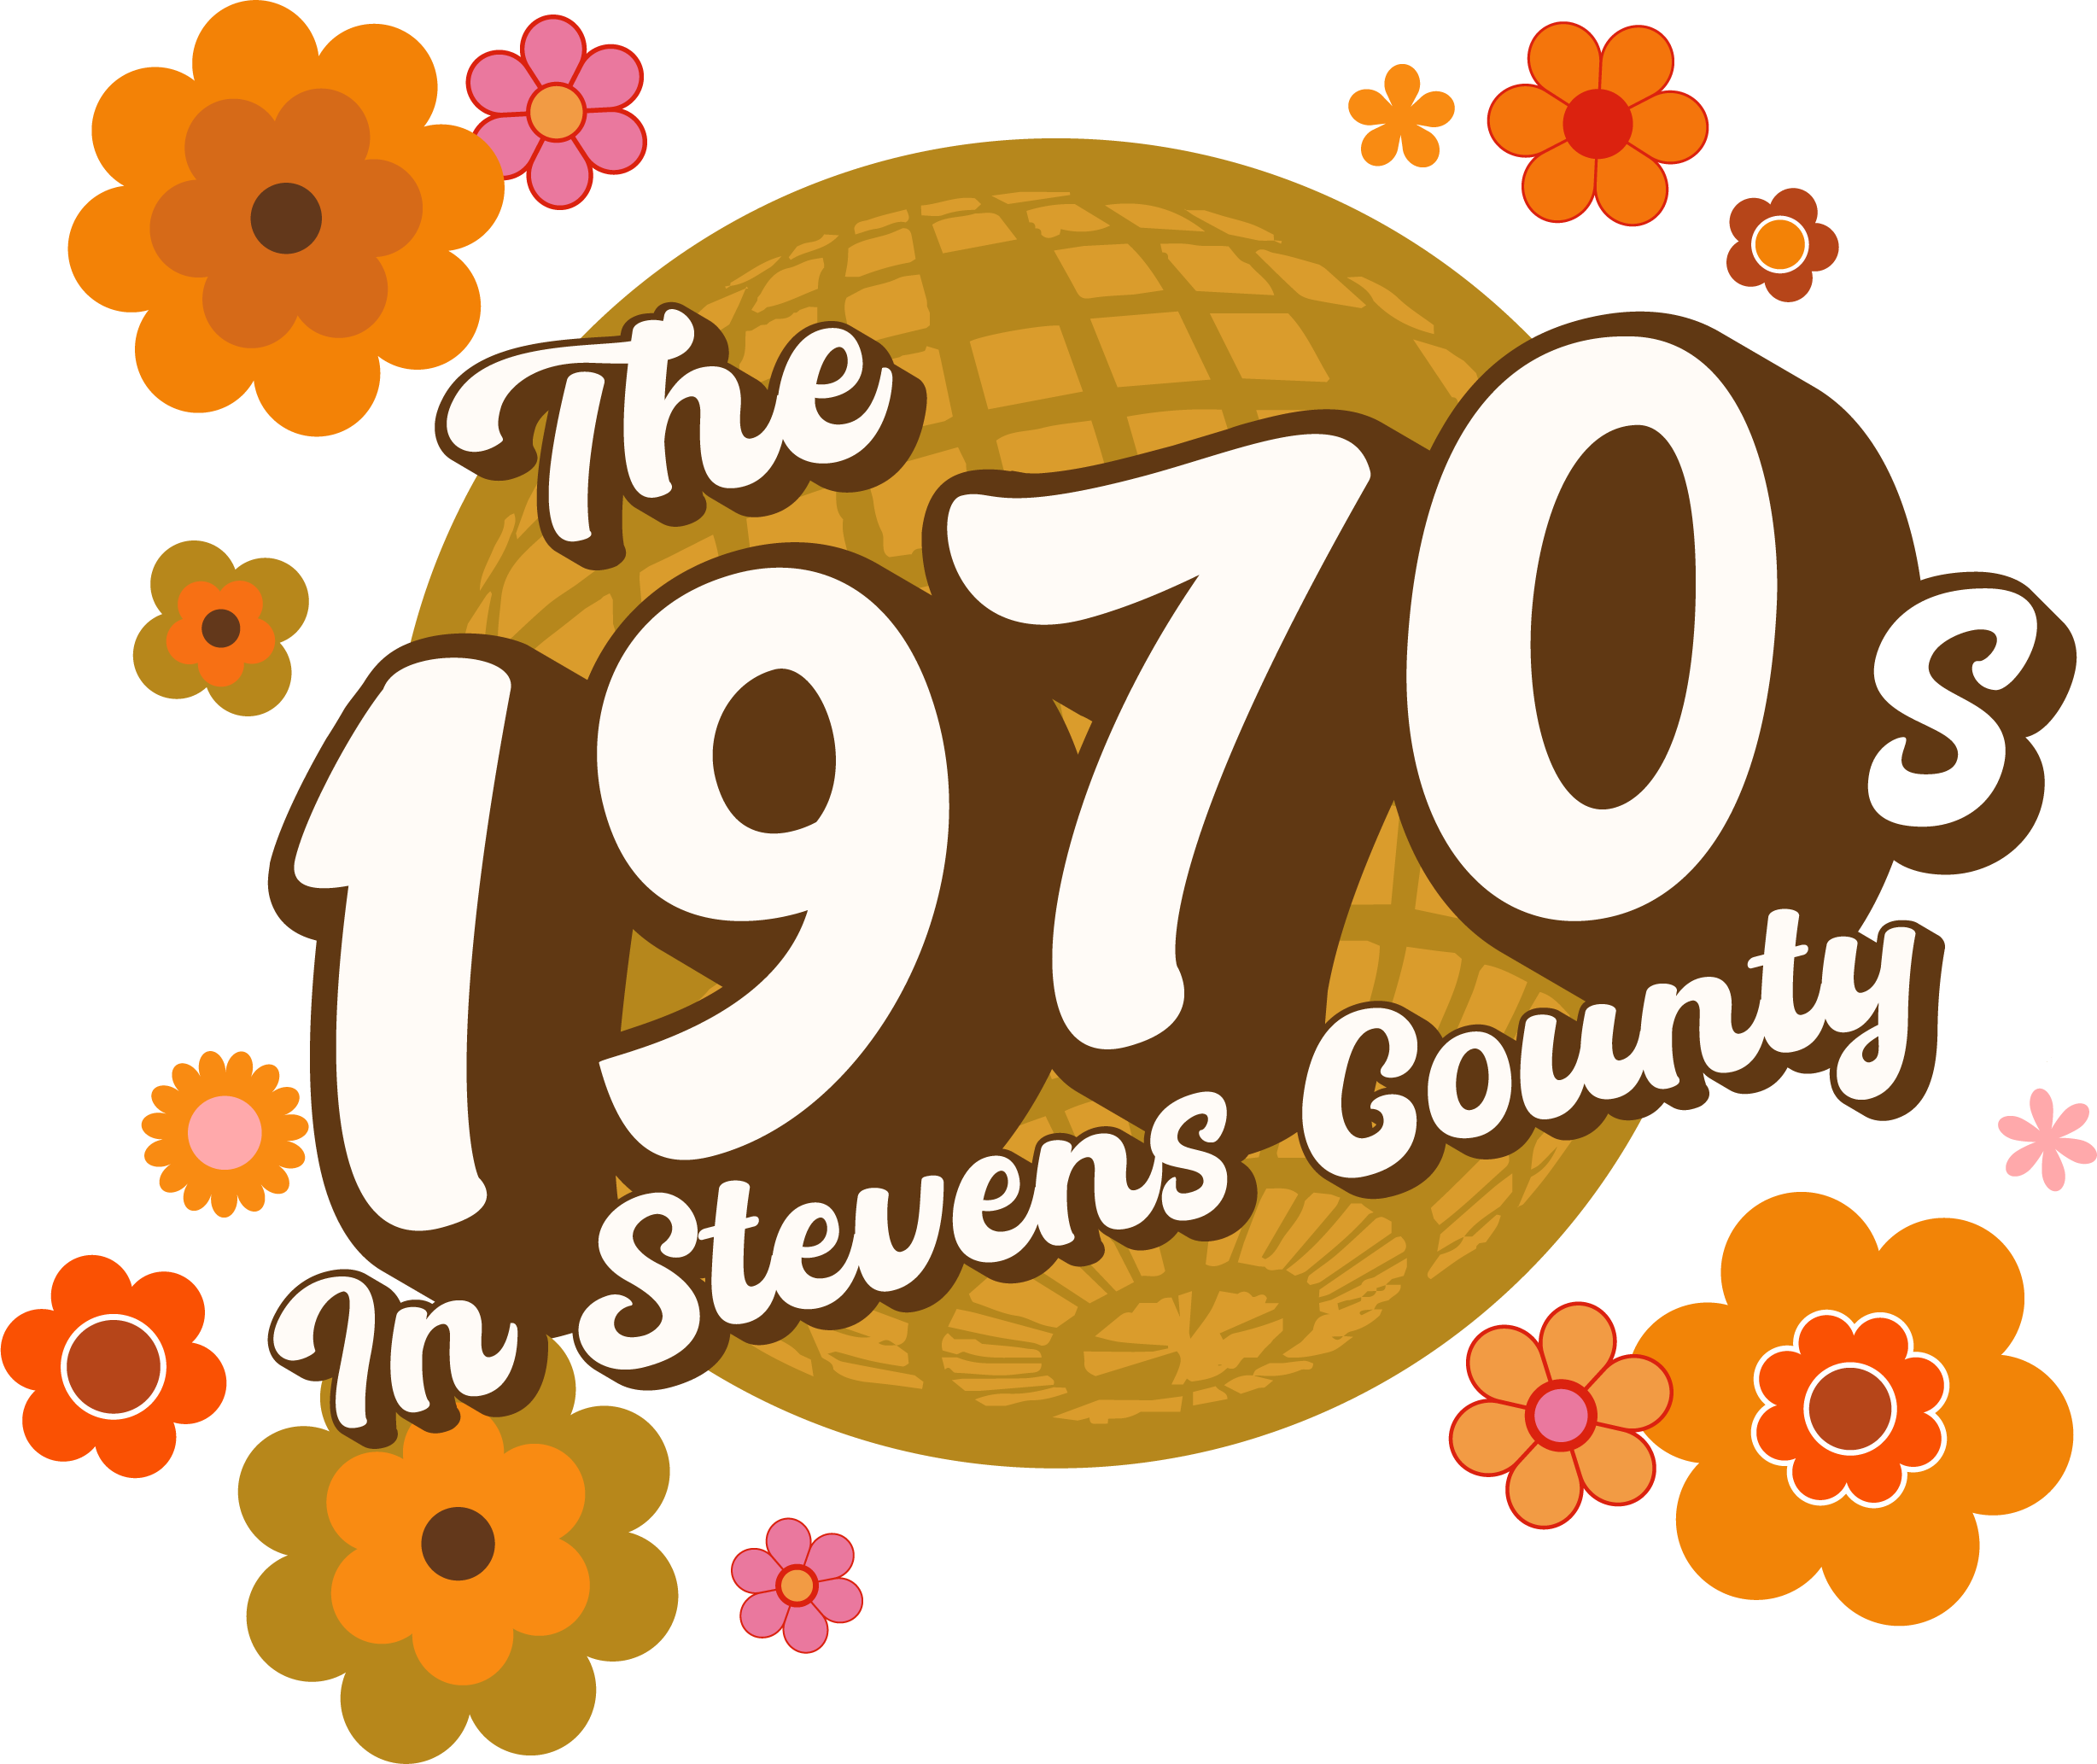 The 1970s in Stevens County